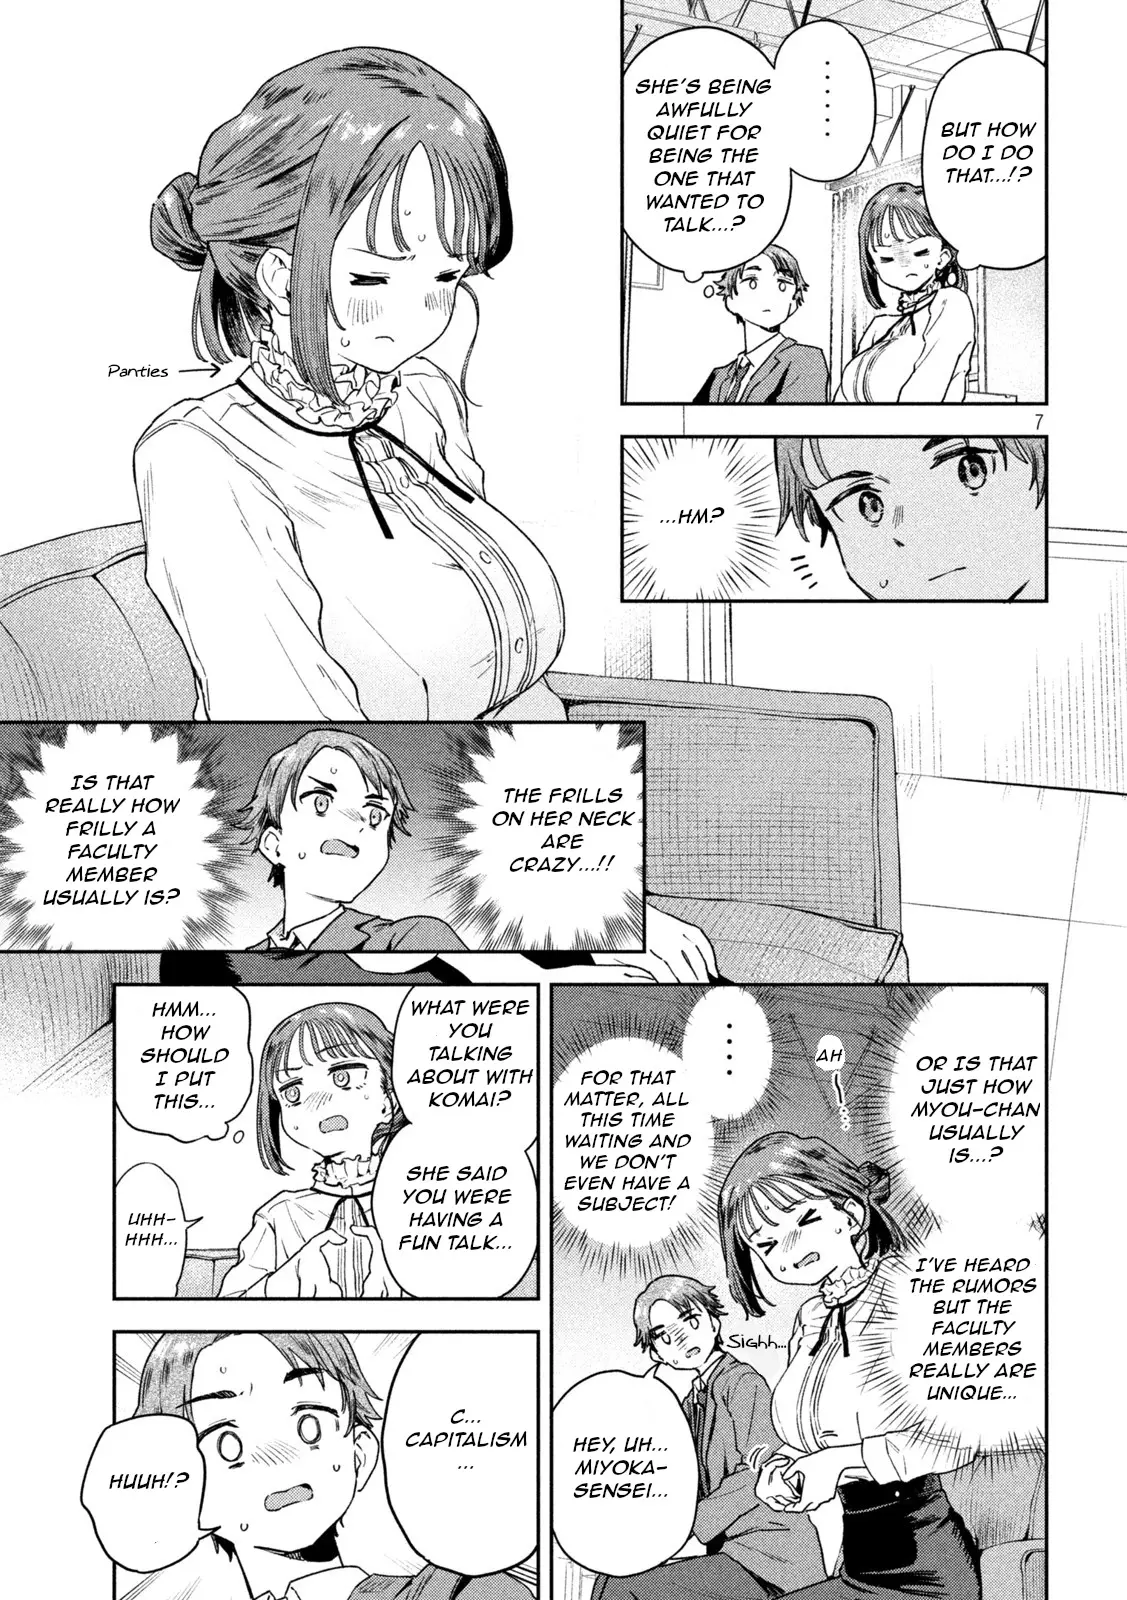 Miyo-Chan Sensei Said So - 7 page 7-d5e114c2